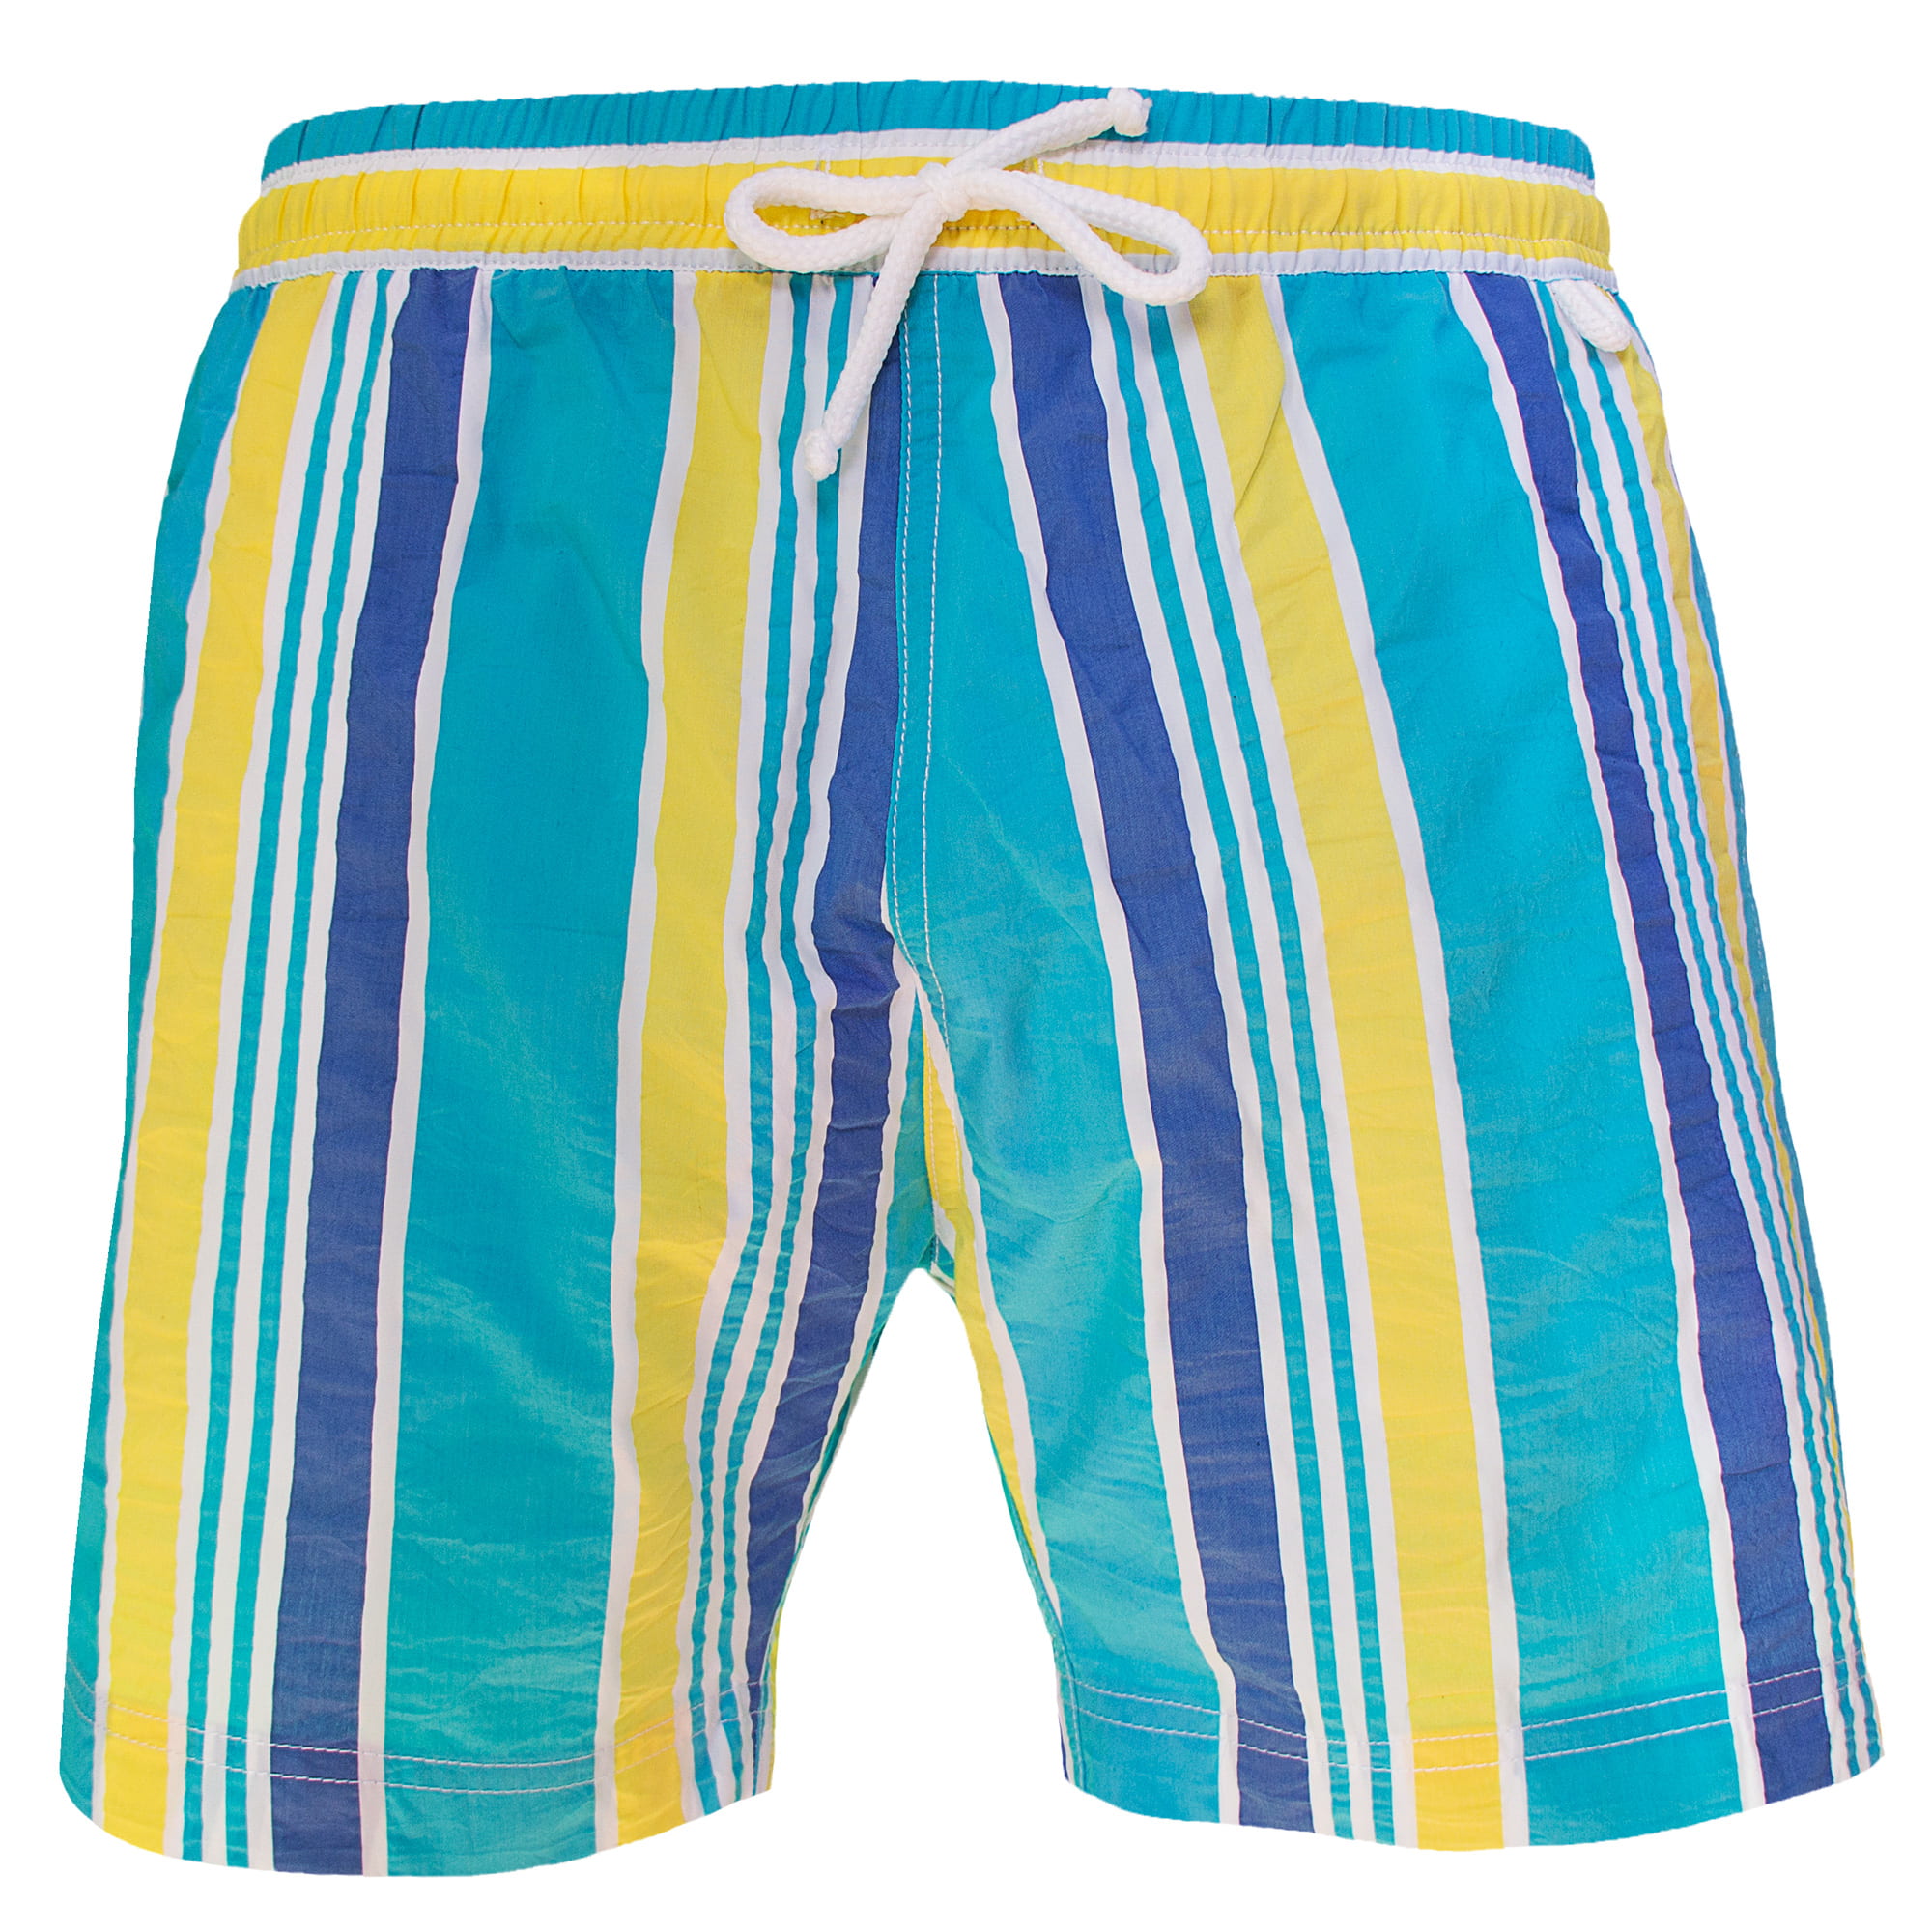 Montauk - Larges rayures | Maillot Short de bain homme bleu turquoise jaune